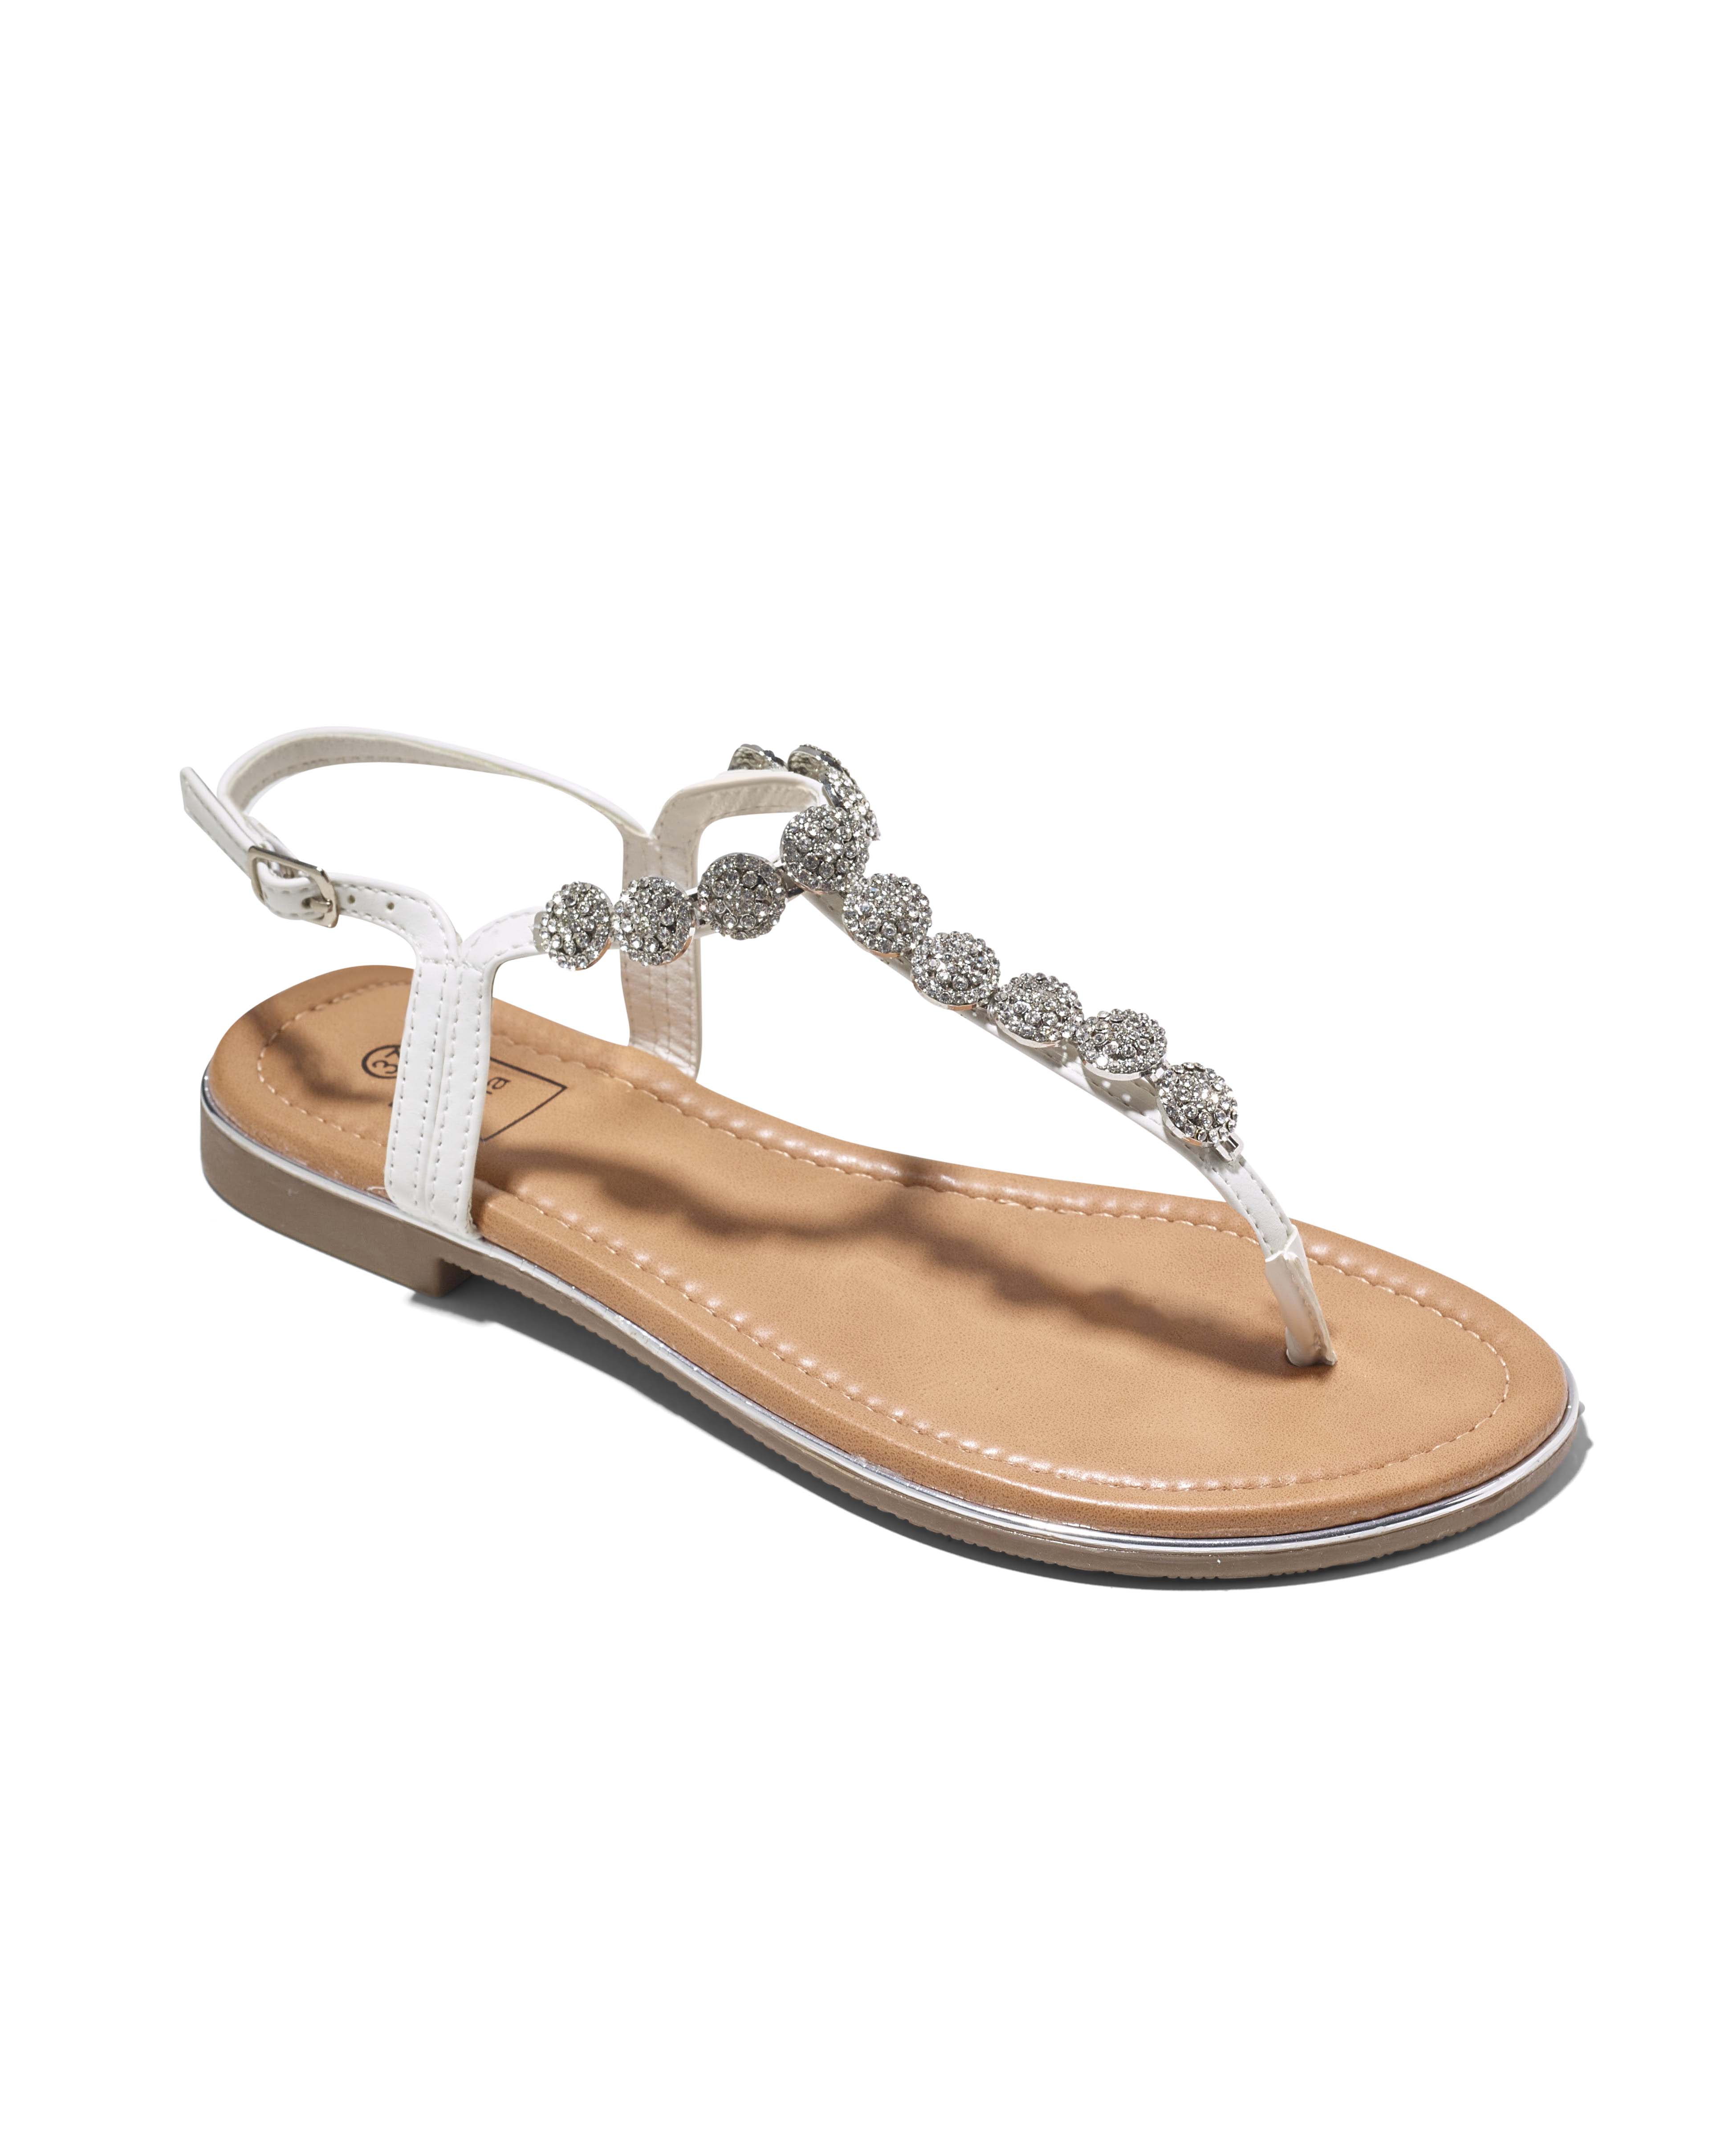 Sandales Plates Femme - Sandale Plate Blanc Jina - Zh1031-164